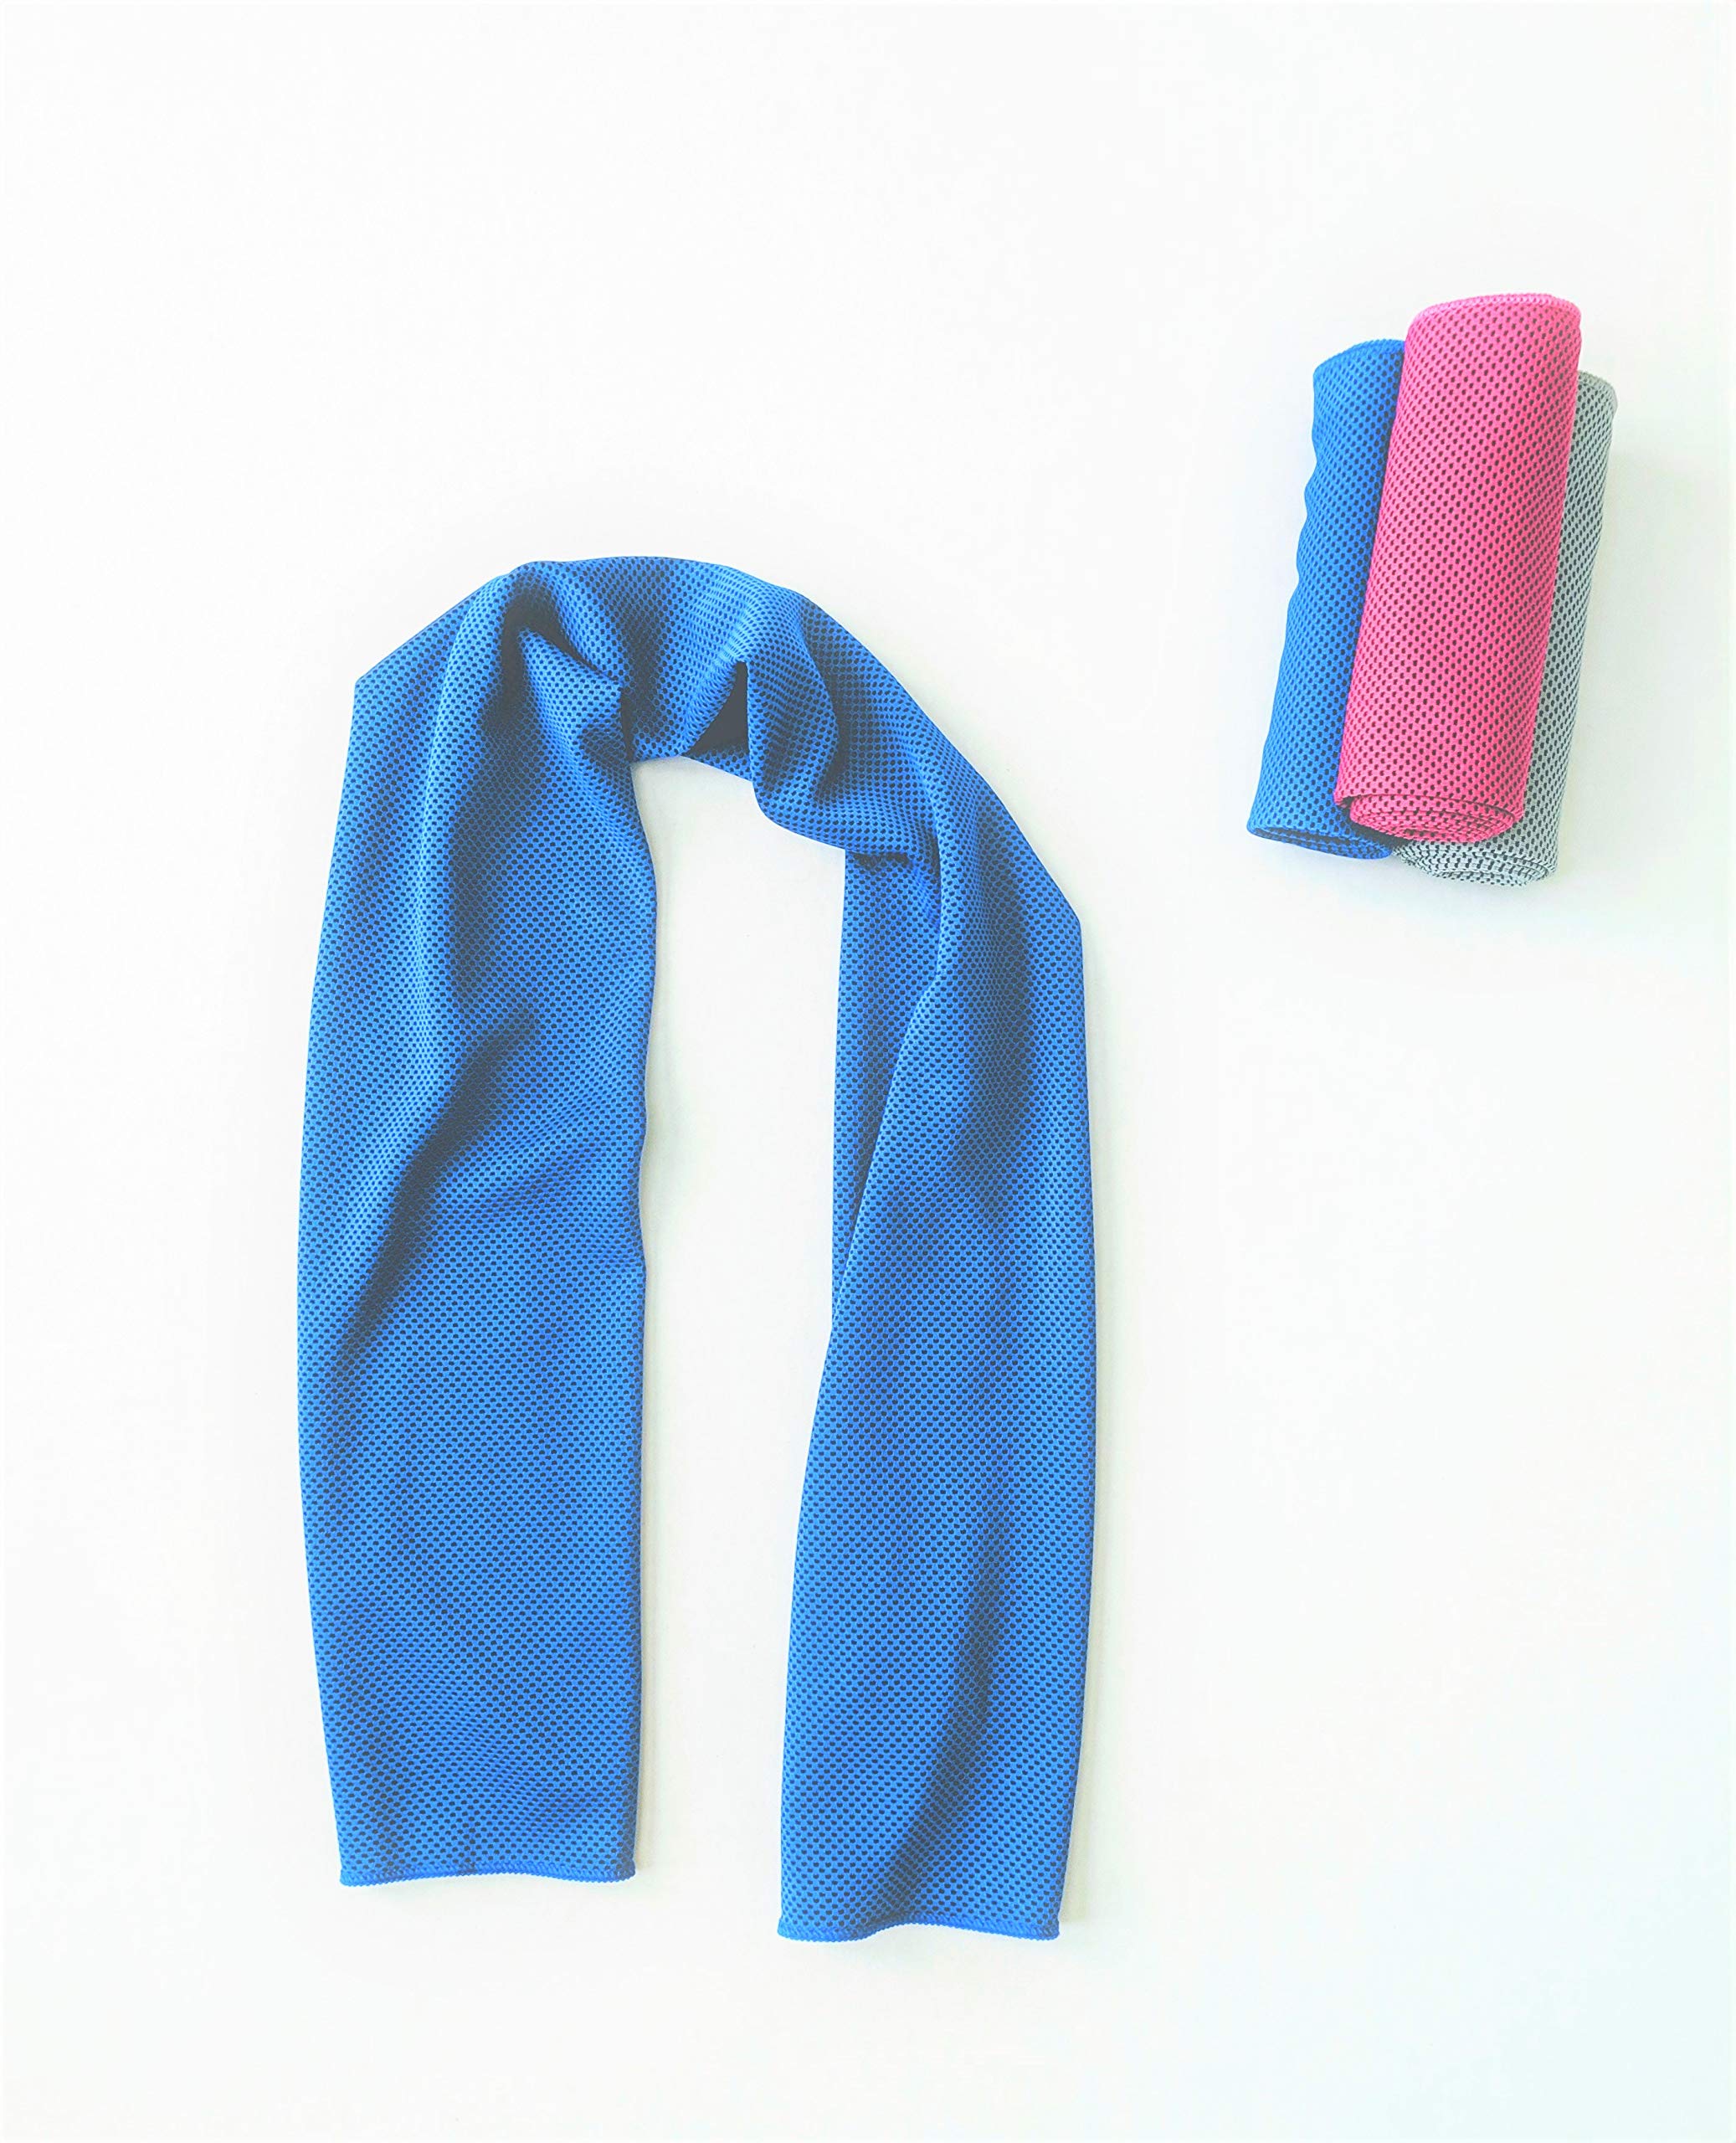 Cala Cobalt blue cooling towel, Blute